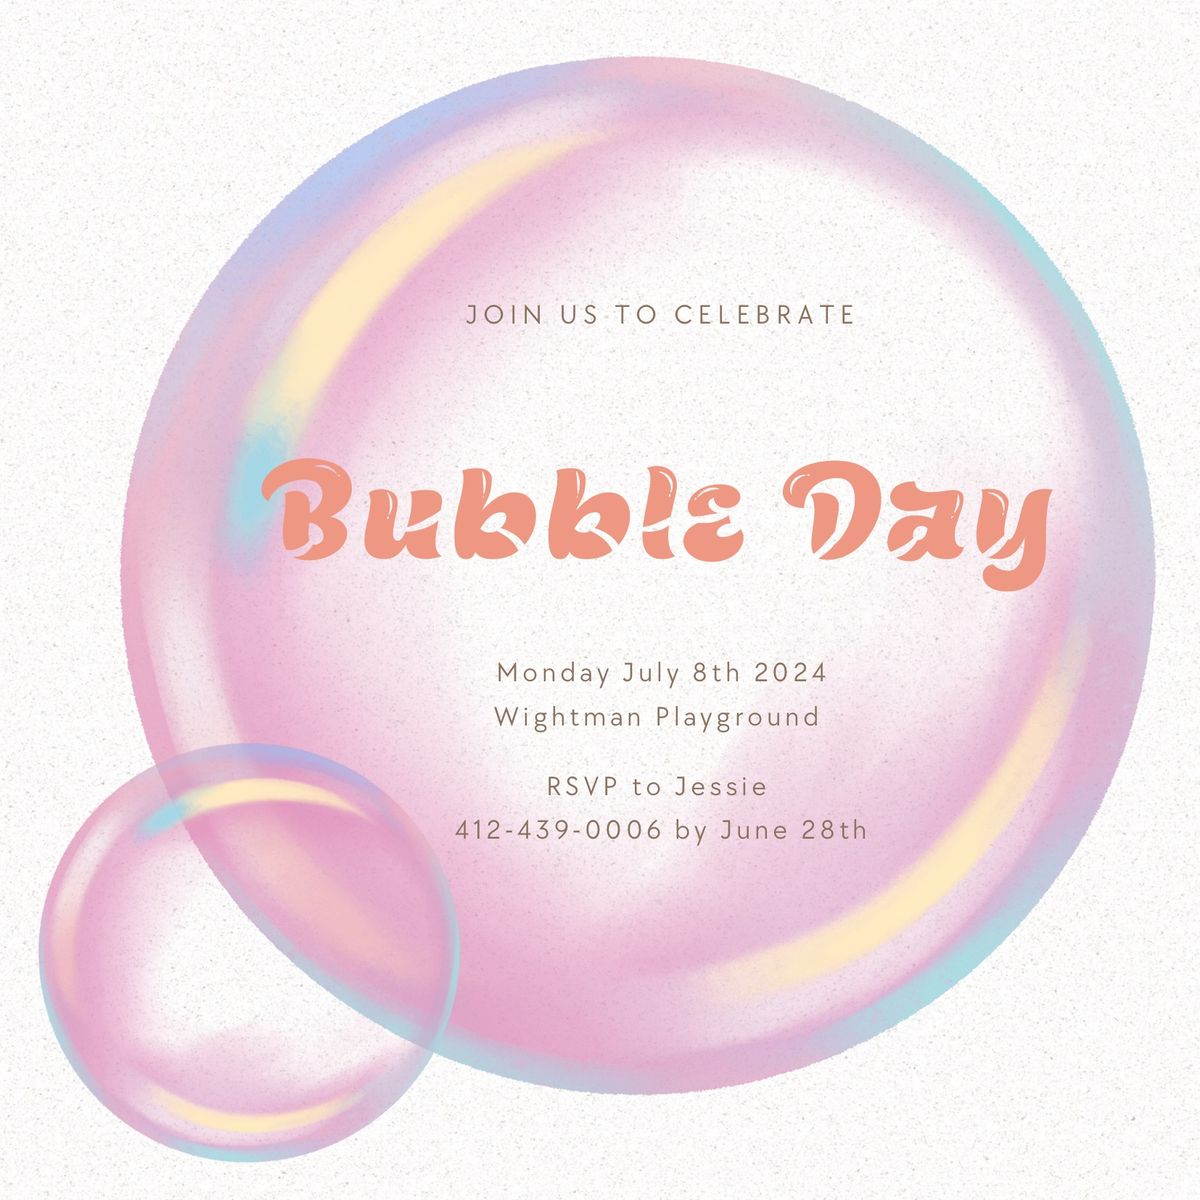 Second Annual Bubble day